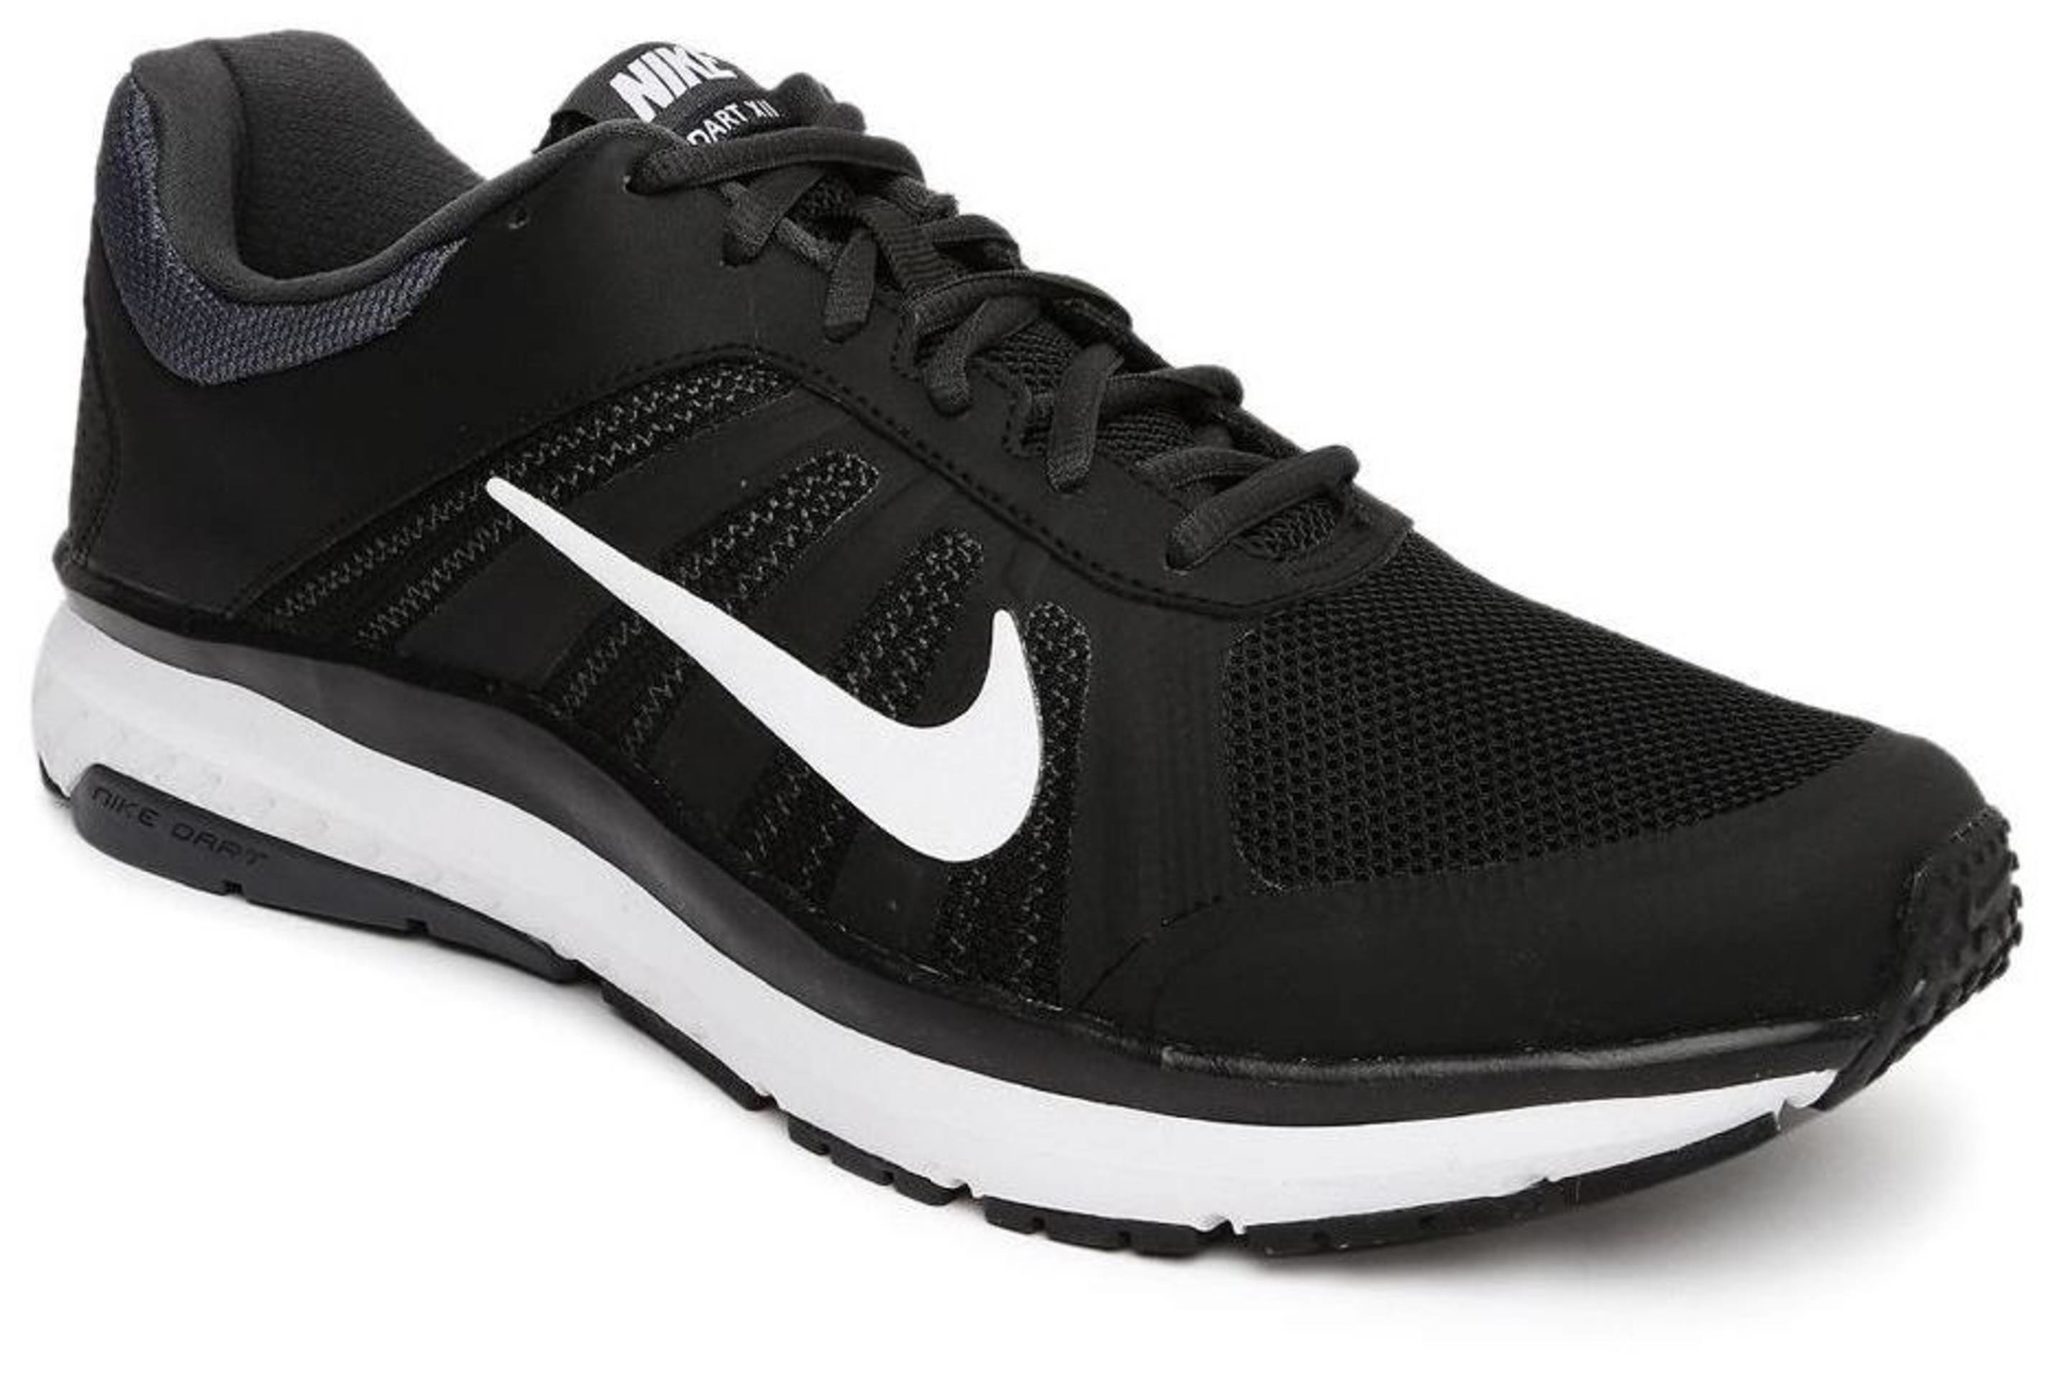 Buy Nike Men's Black Sports Shoe Online - Get 45% Off